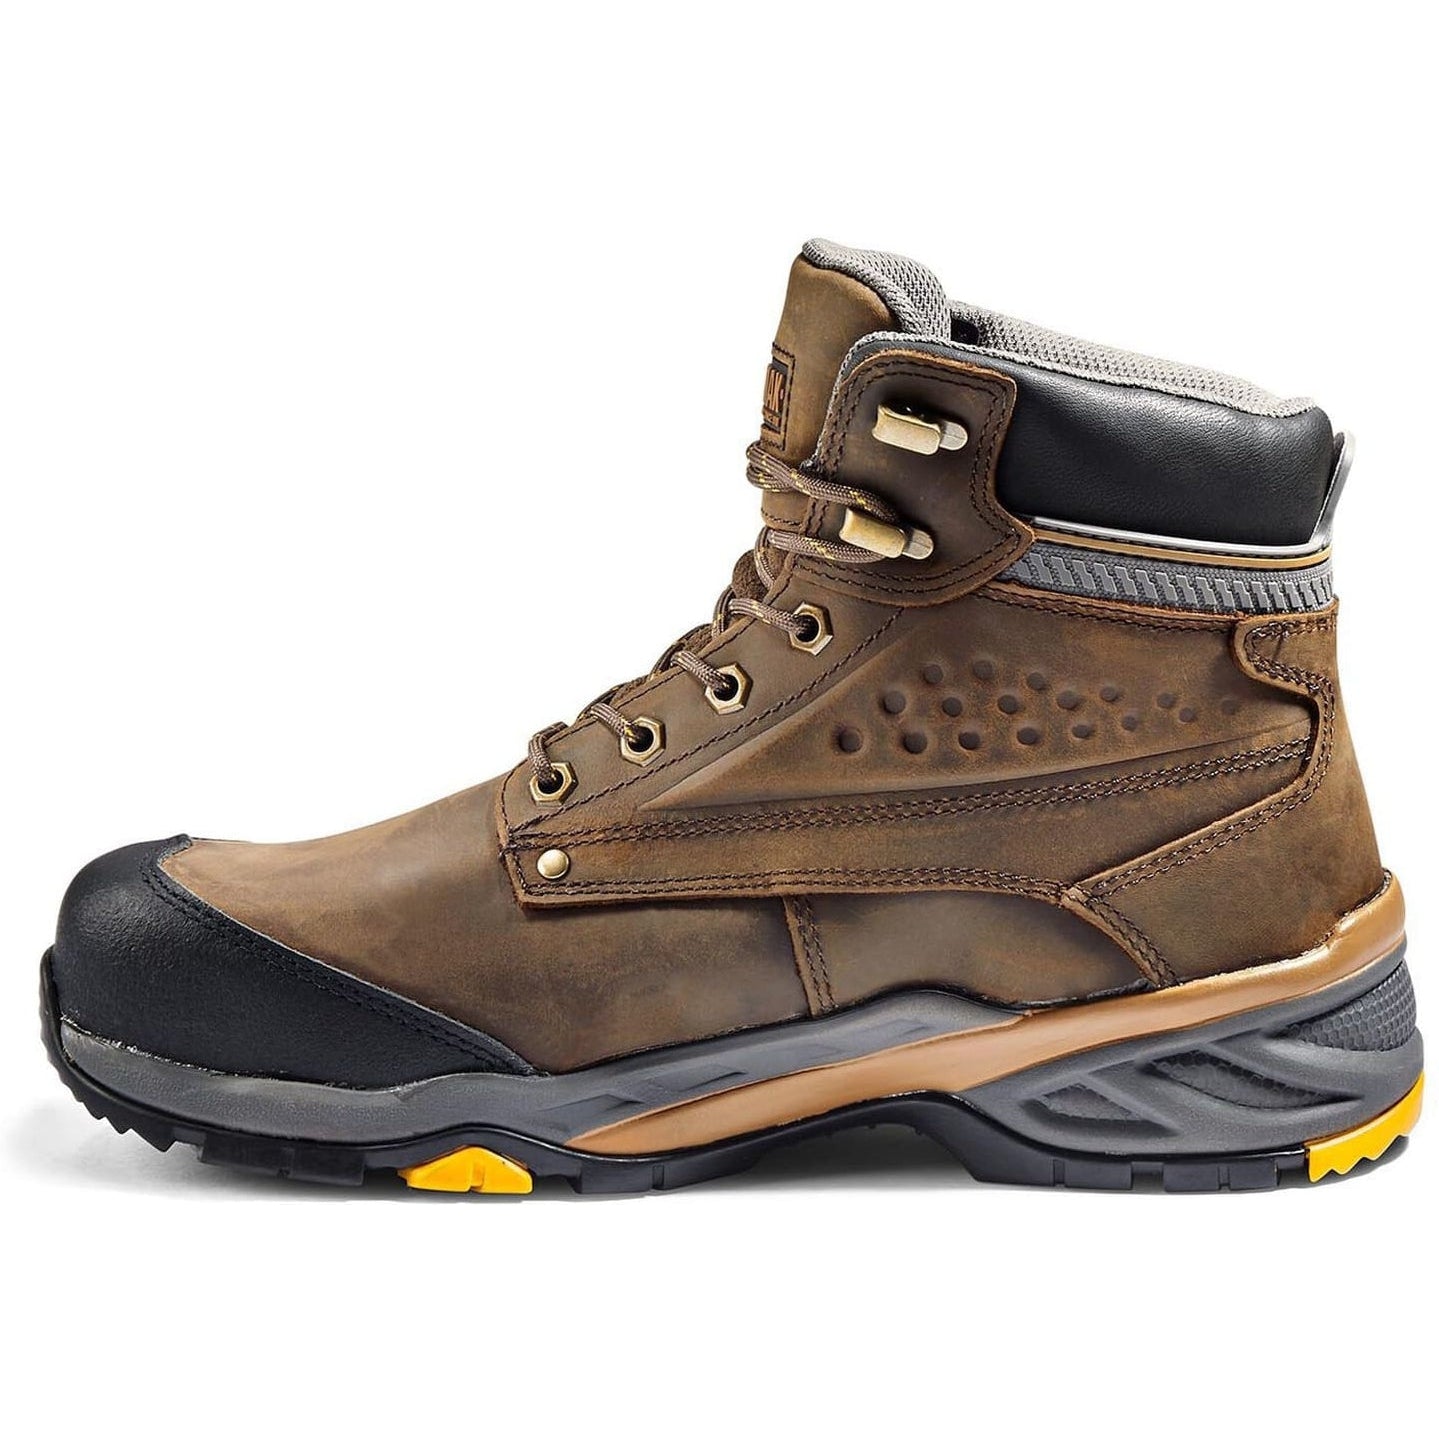 Kodiak Men's Crusade 6" Comp Toe WP Hiker Safety Work Boot -Brown- K4NKAD  - Overlook Boots